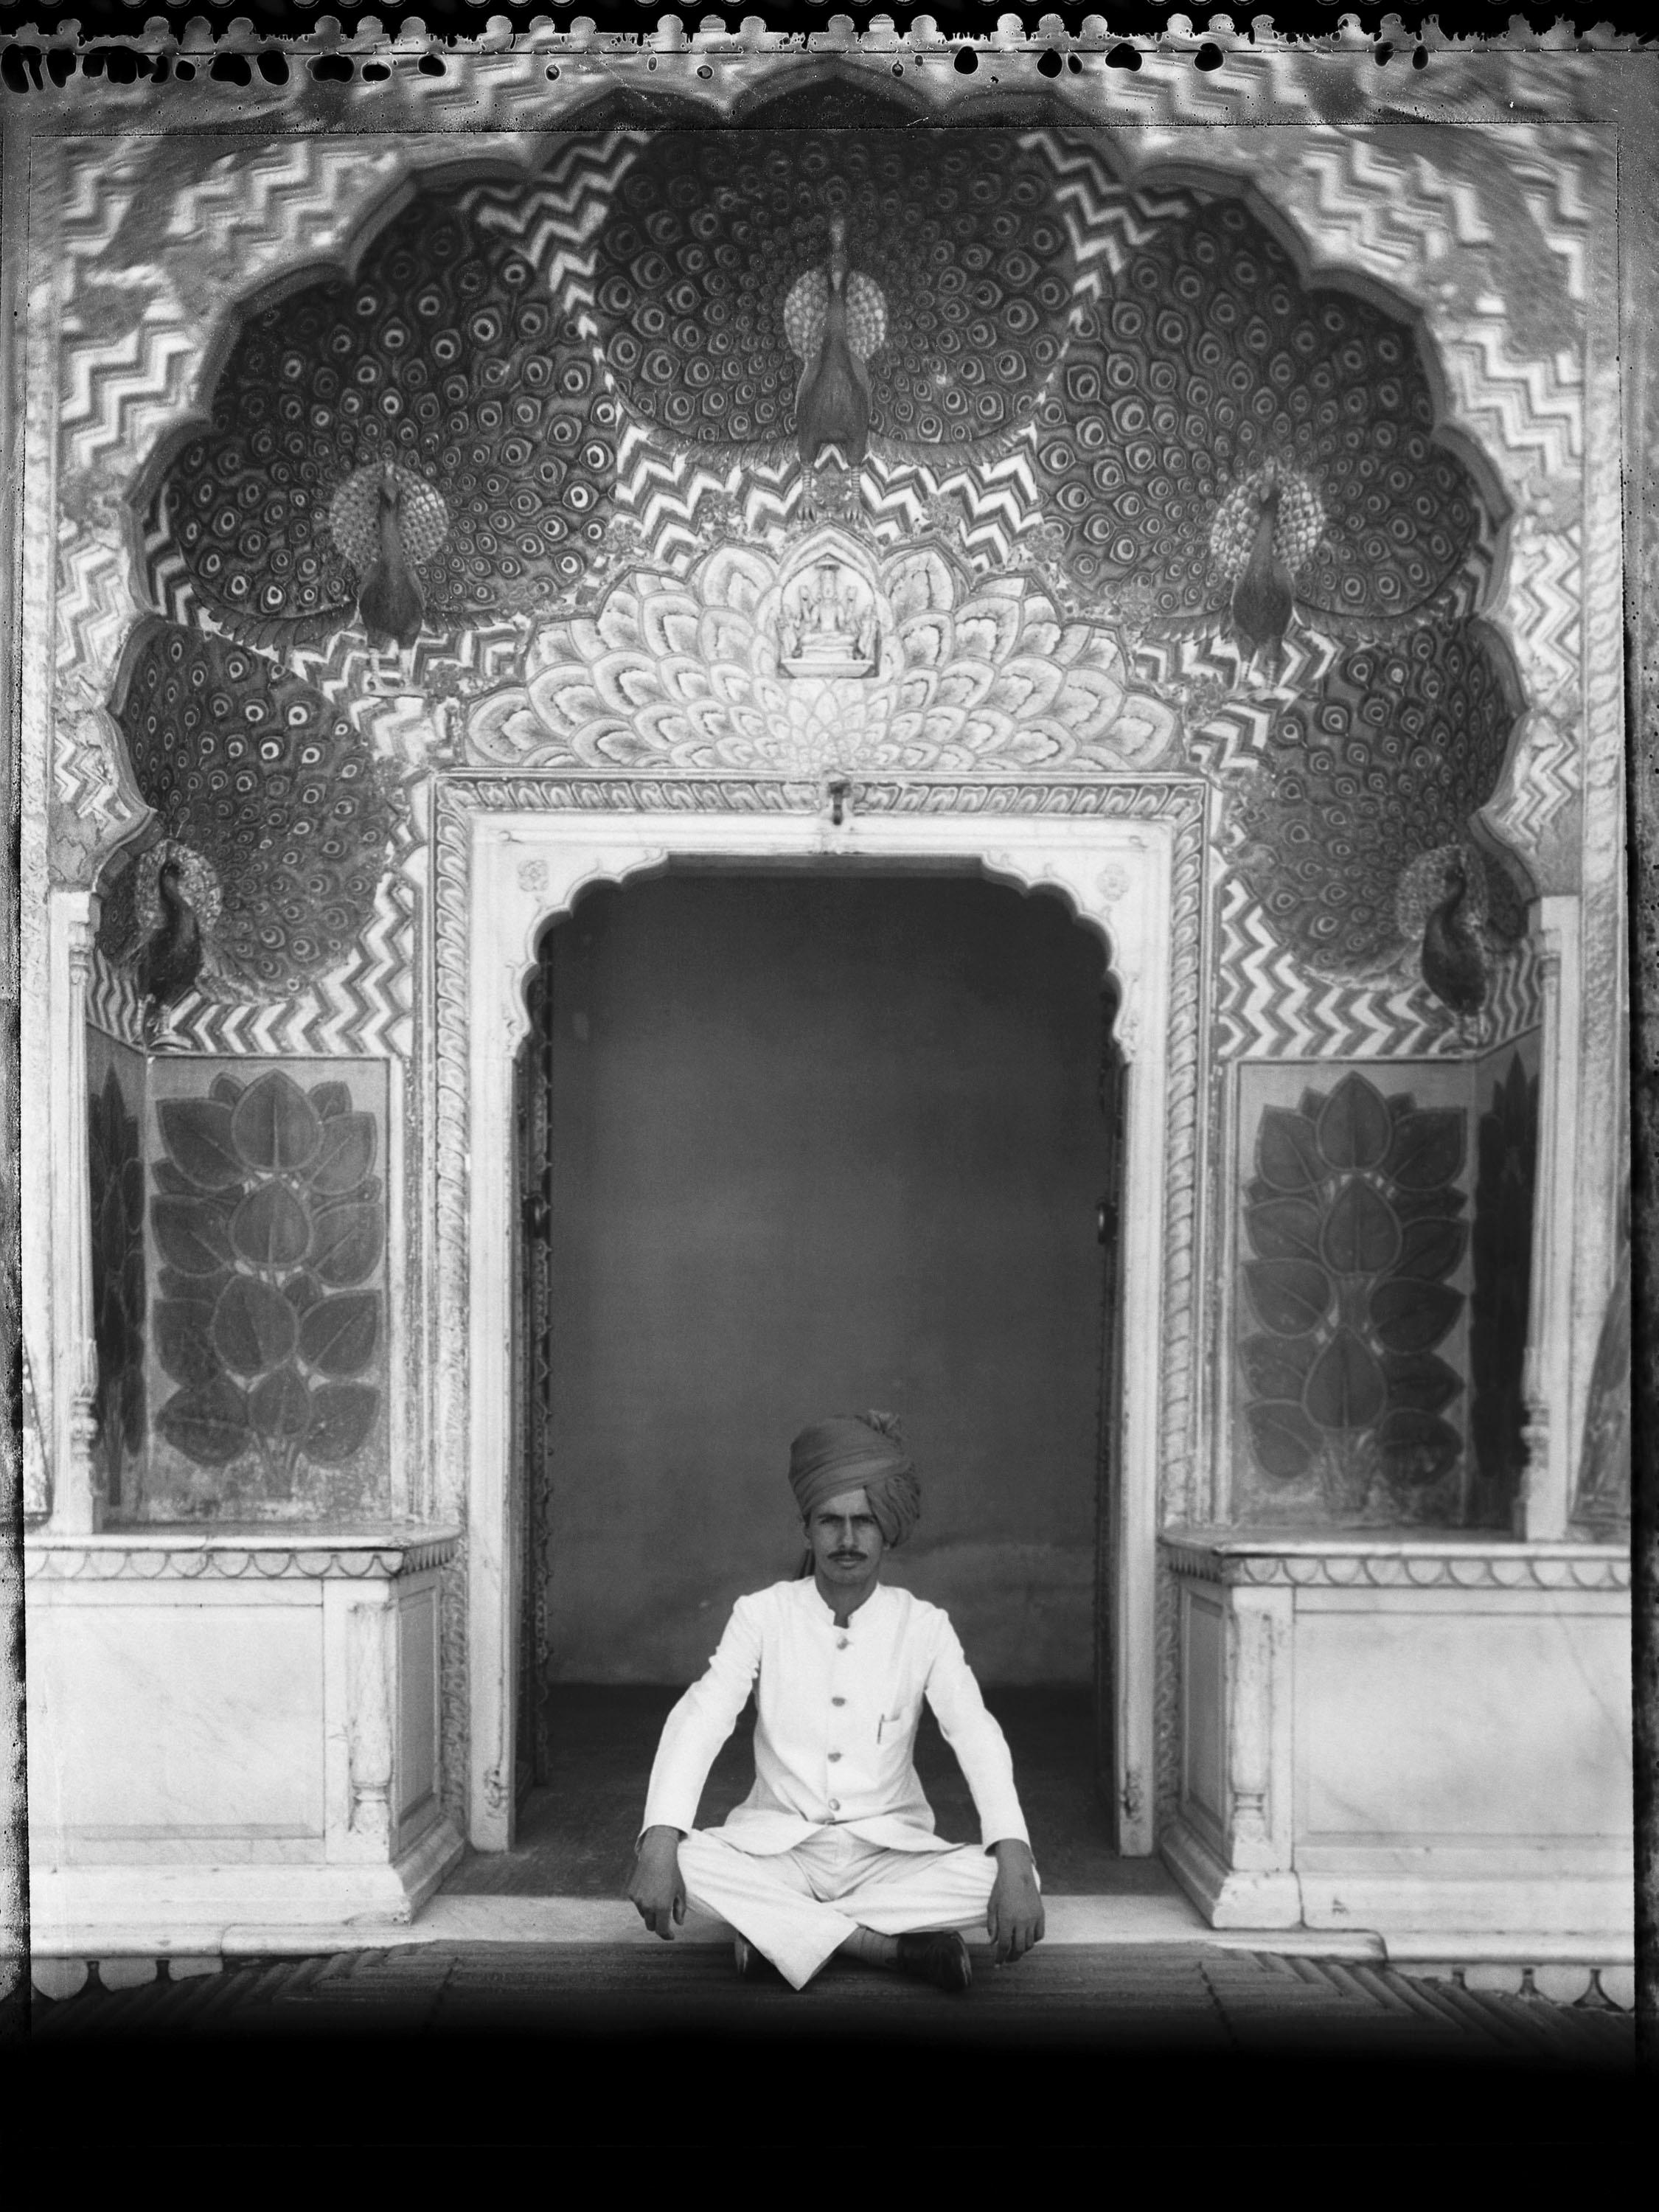 Carlo Bevilacqua Portrait Photograph - Peackocs door - Rajastan -India (from Indian Stills series )